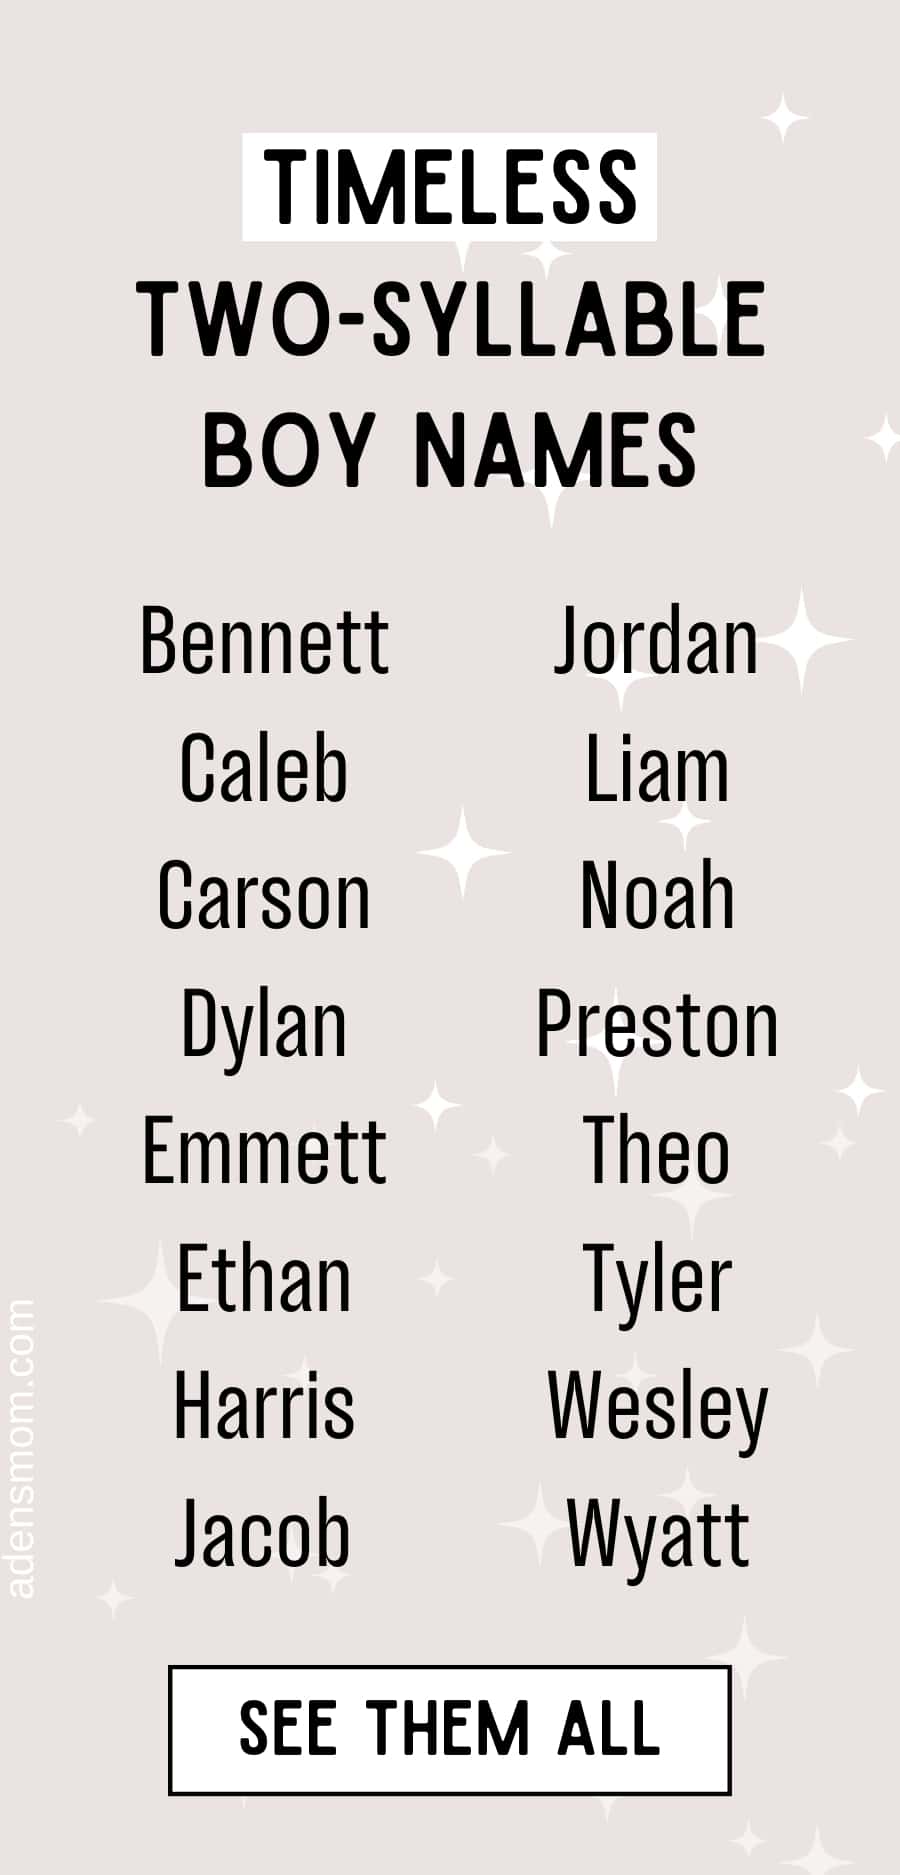 timeless two syllable boy names list